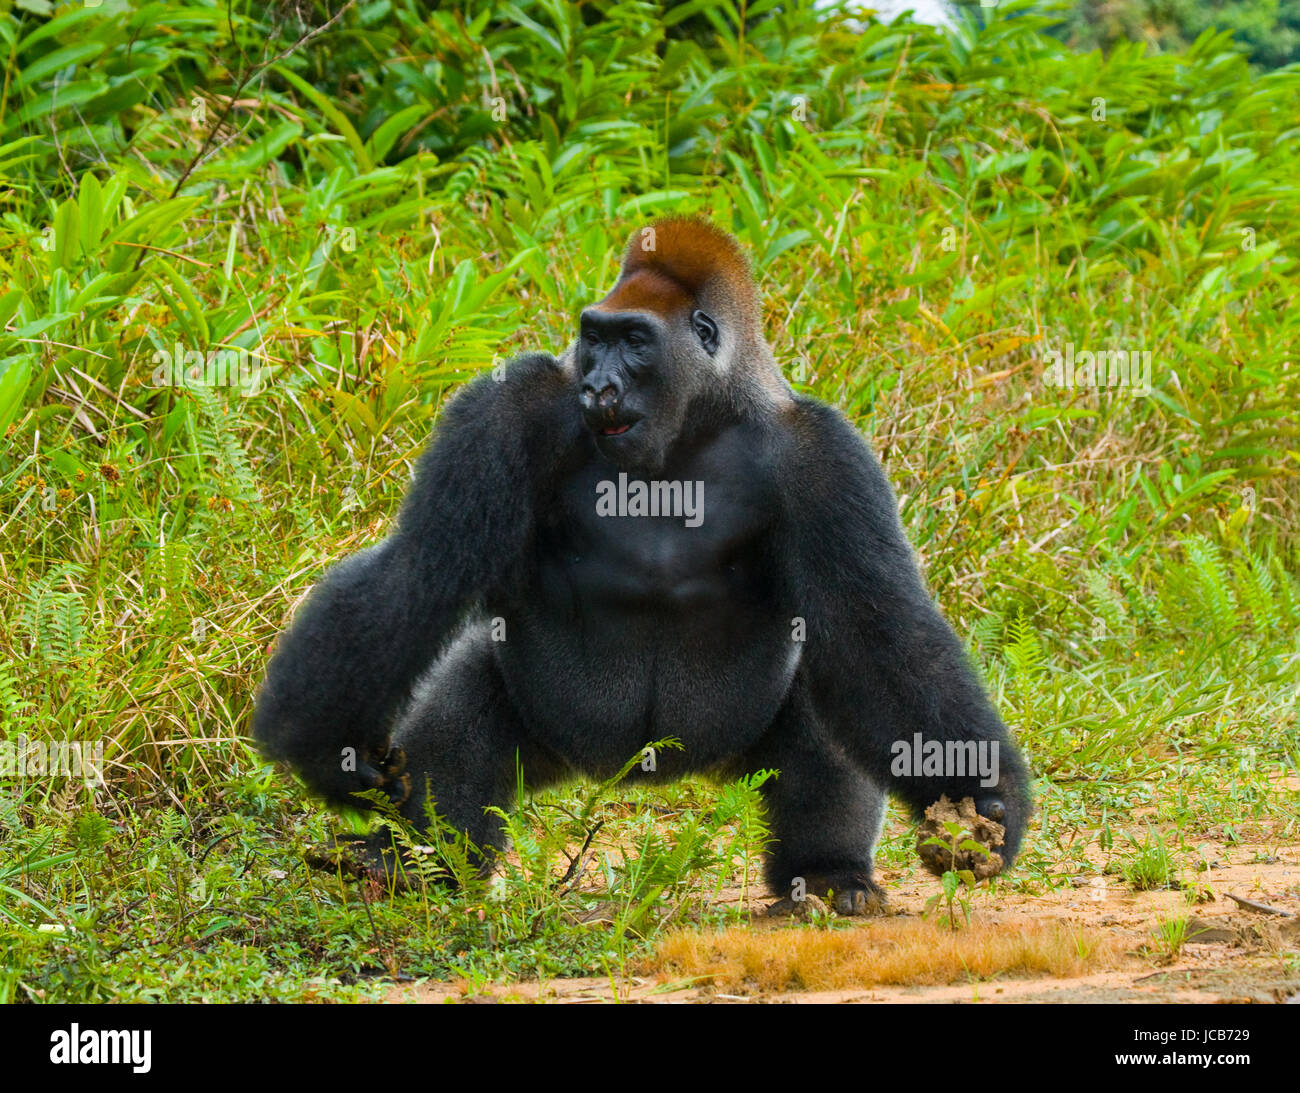 Lowland gorillas in the wild. Republic of the Congo. Stock Photo